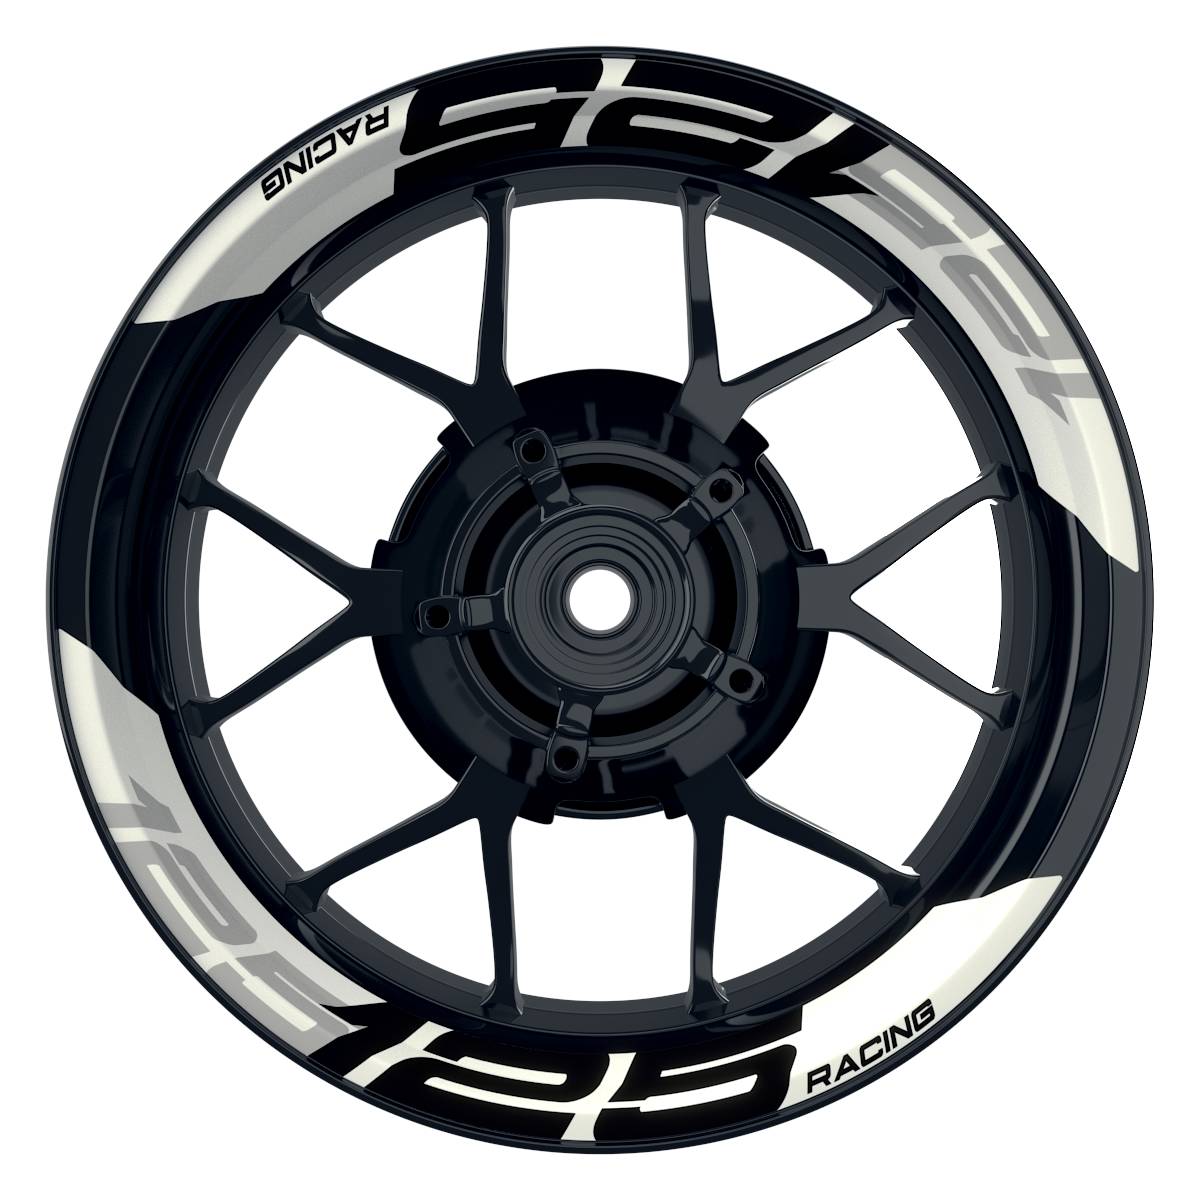 Wheelsticker Felgenaufkleber KTM Racing 125 einfarbig V2 weiss Frontansicht